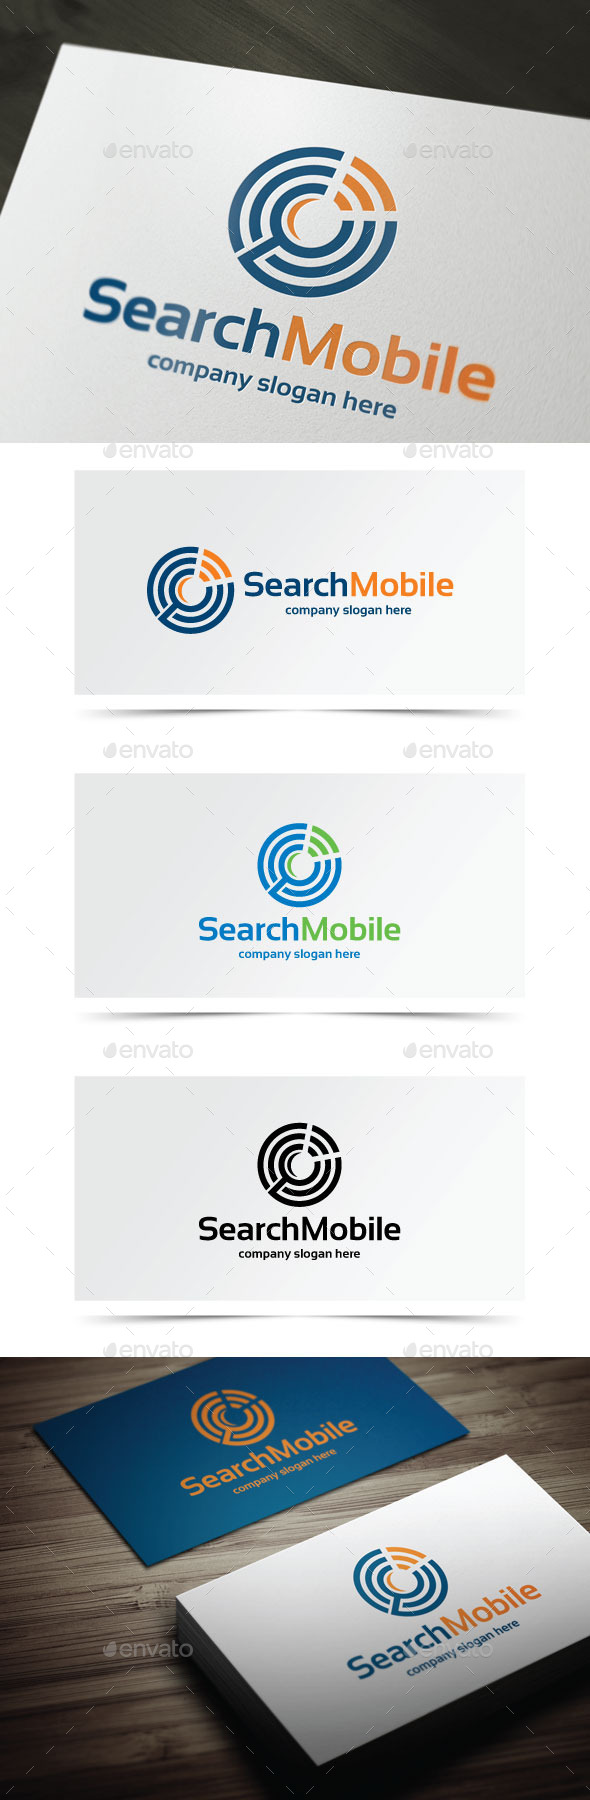 Search Mobile